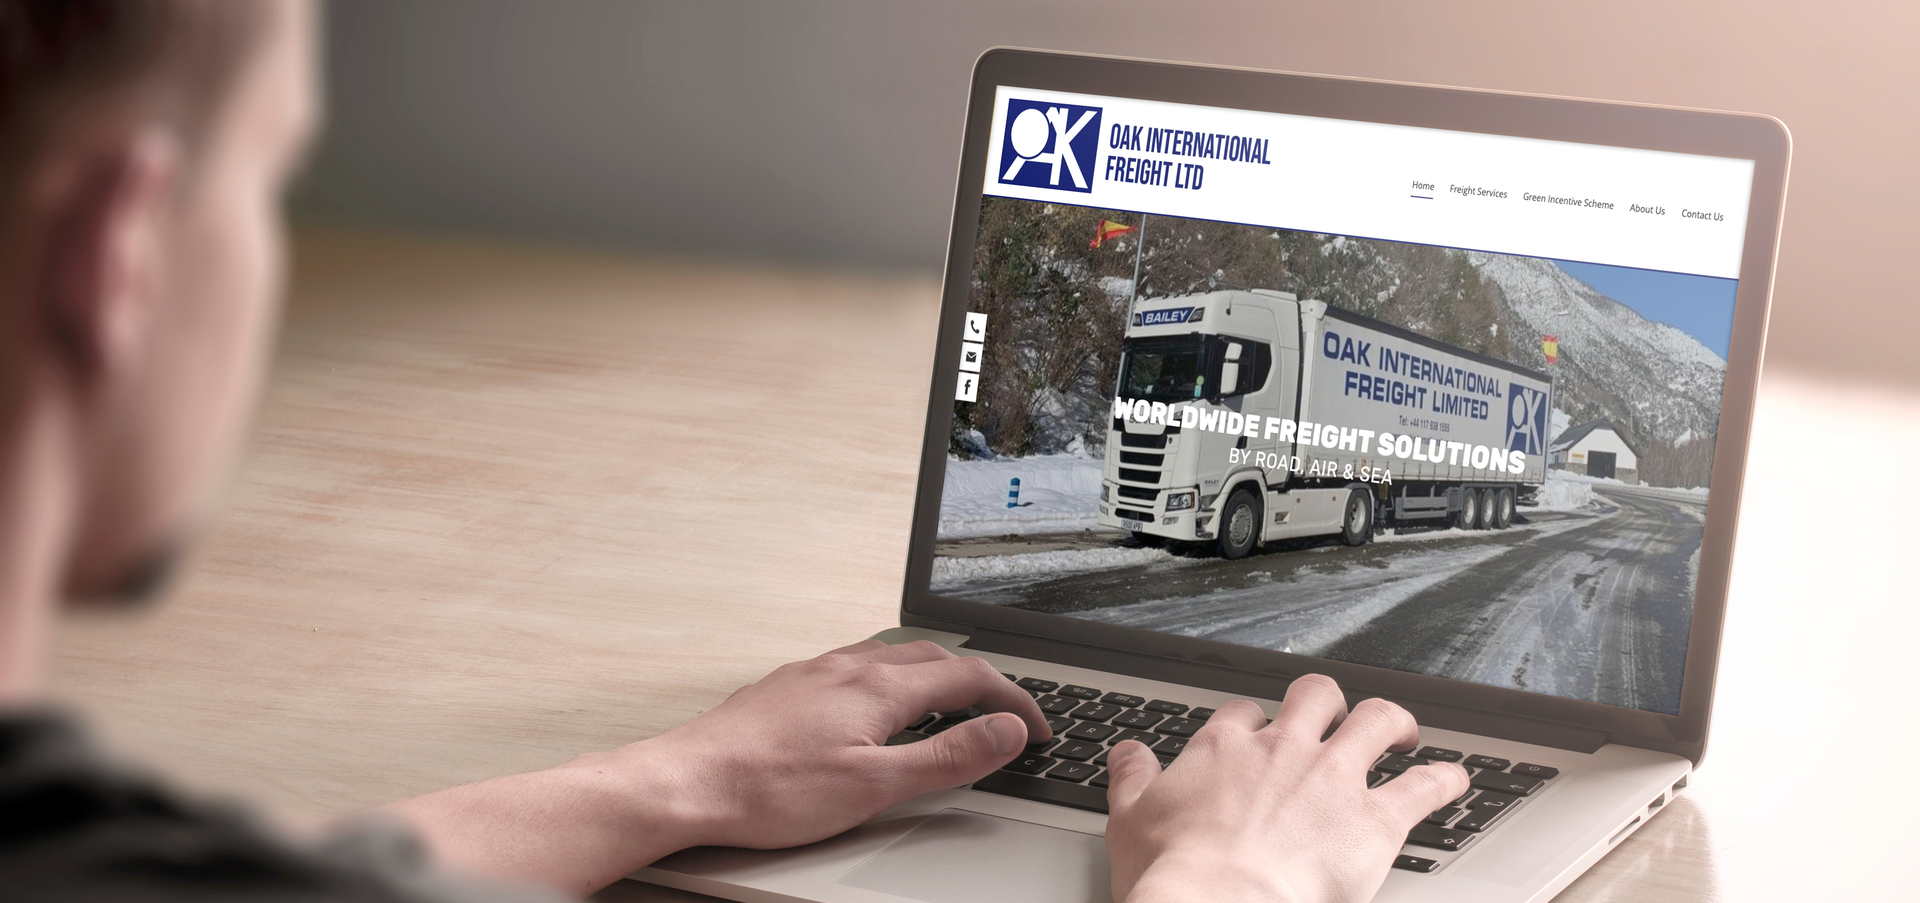 Oak International Freight Ltd on a laptop